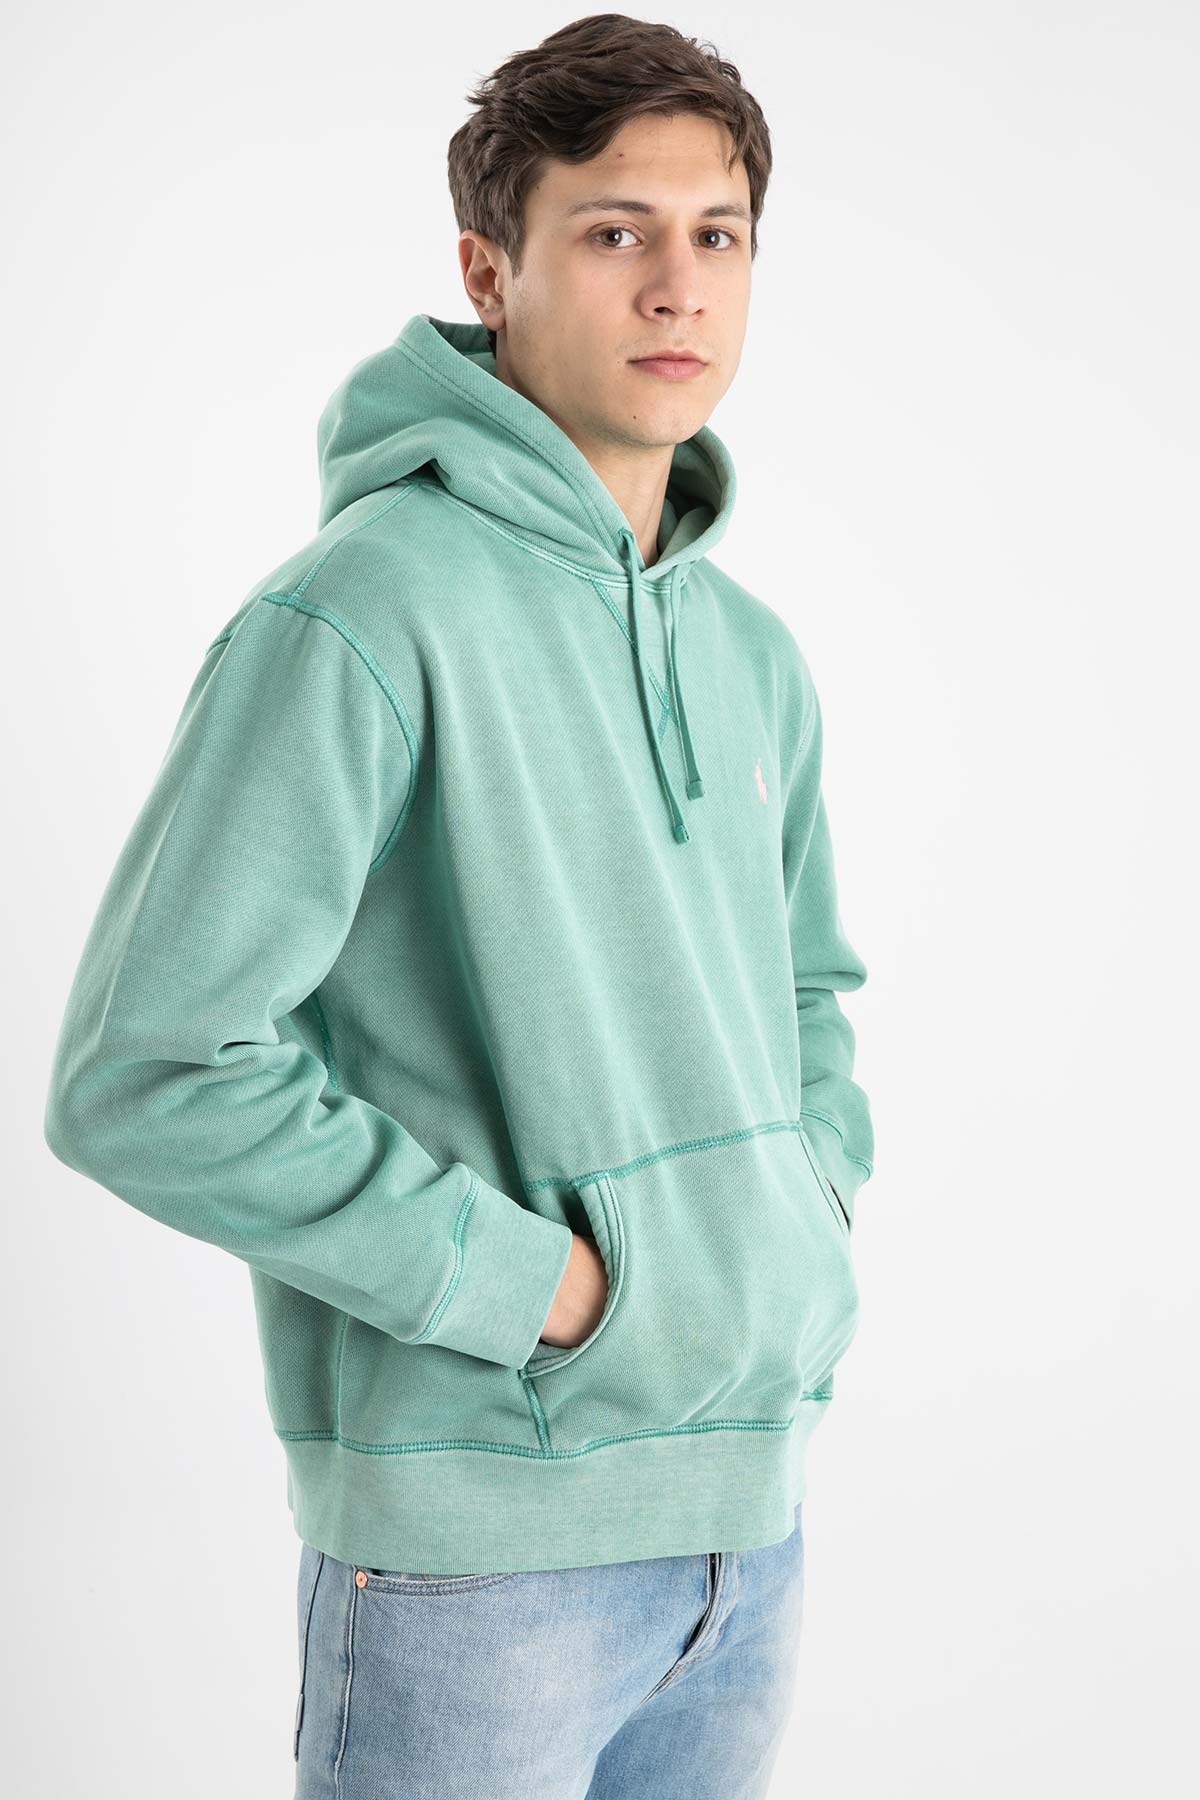 Polo Ralph Lauren Kapüşonlu Yıkamalı Sweatshirt-Libas Trendy Fashion Store